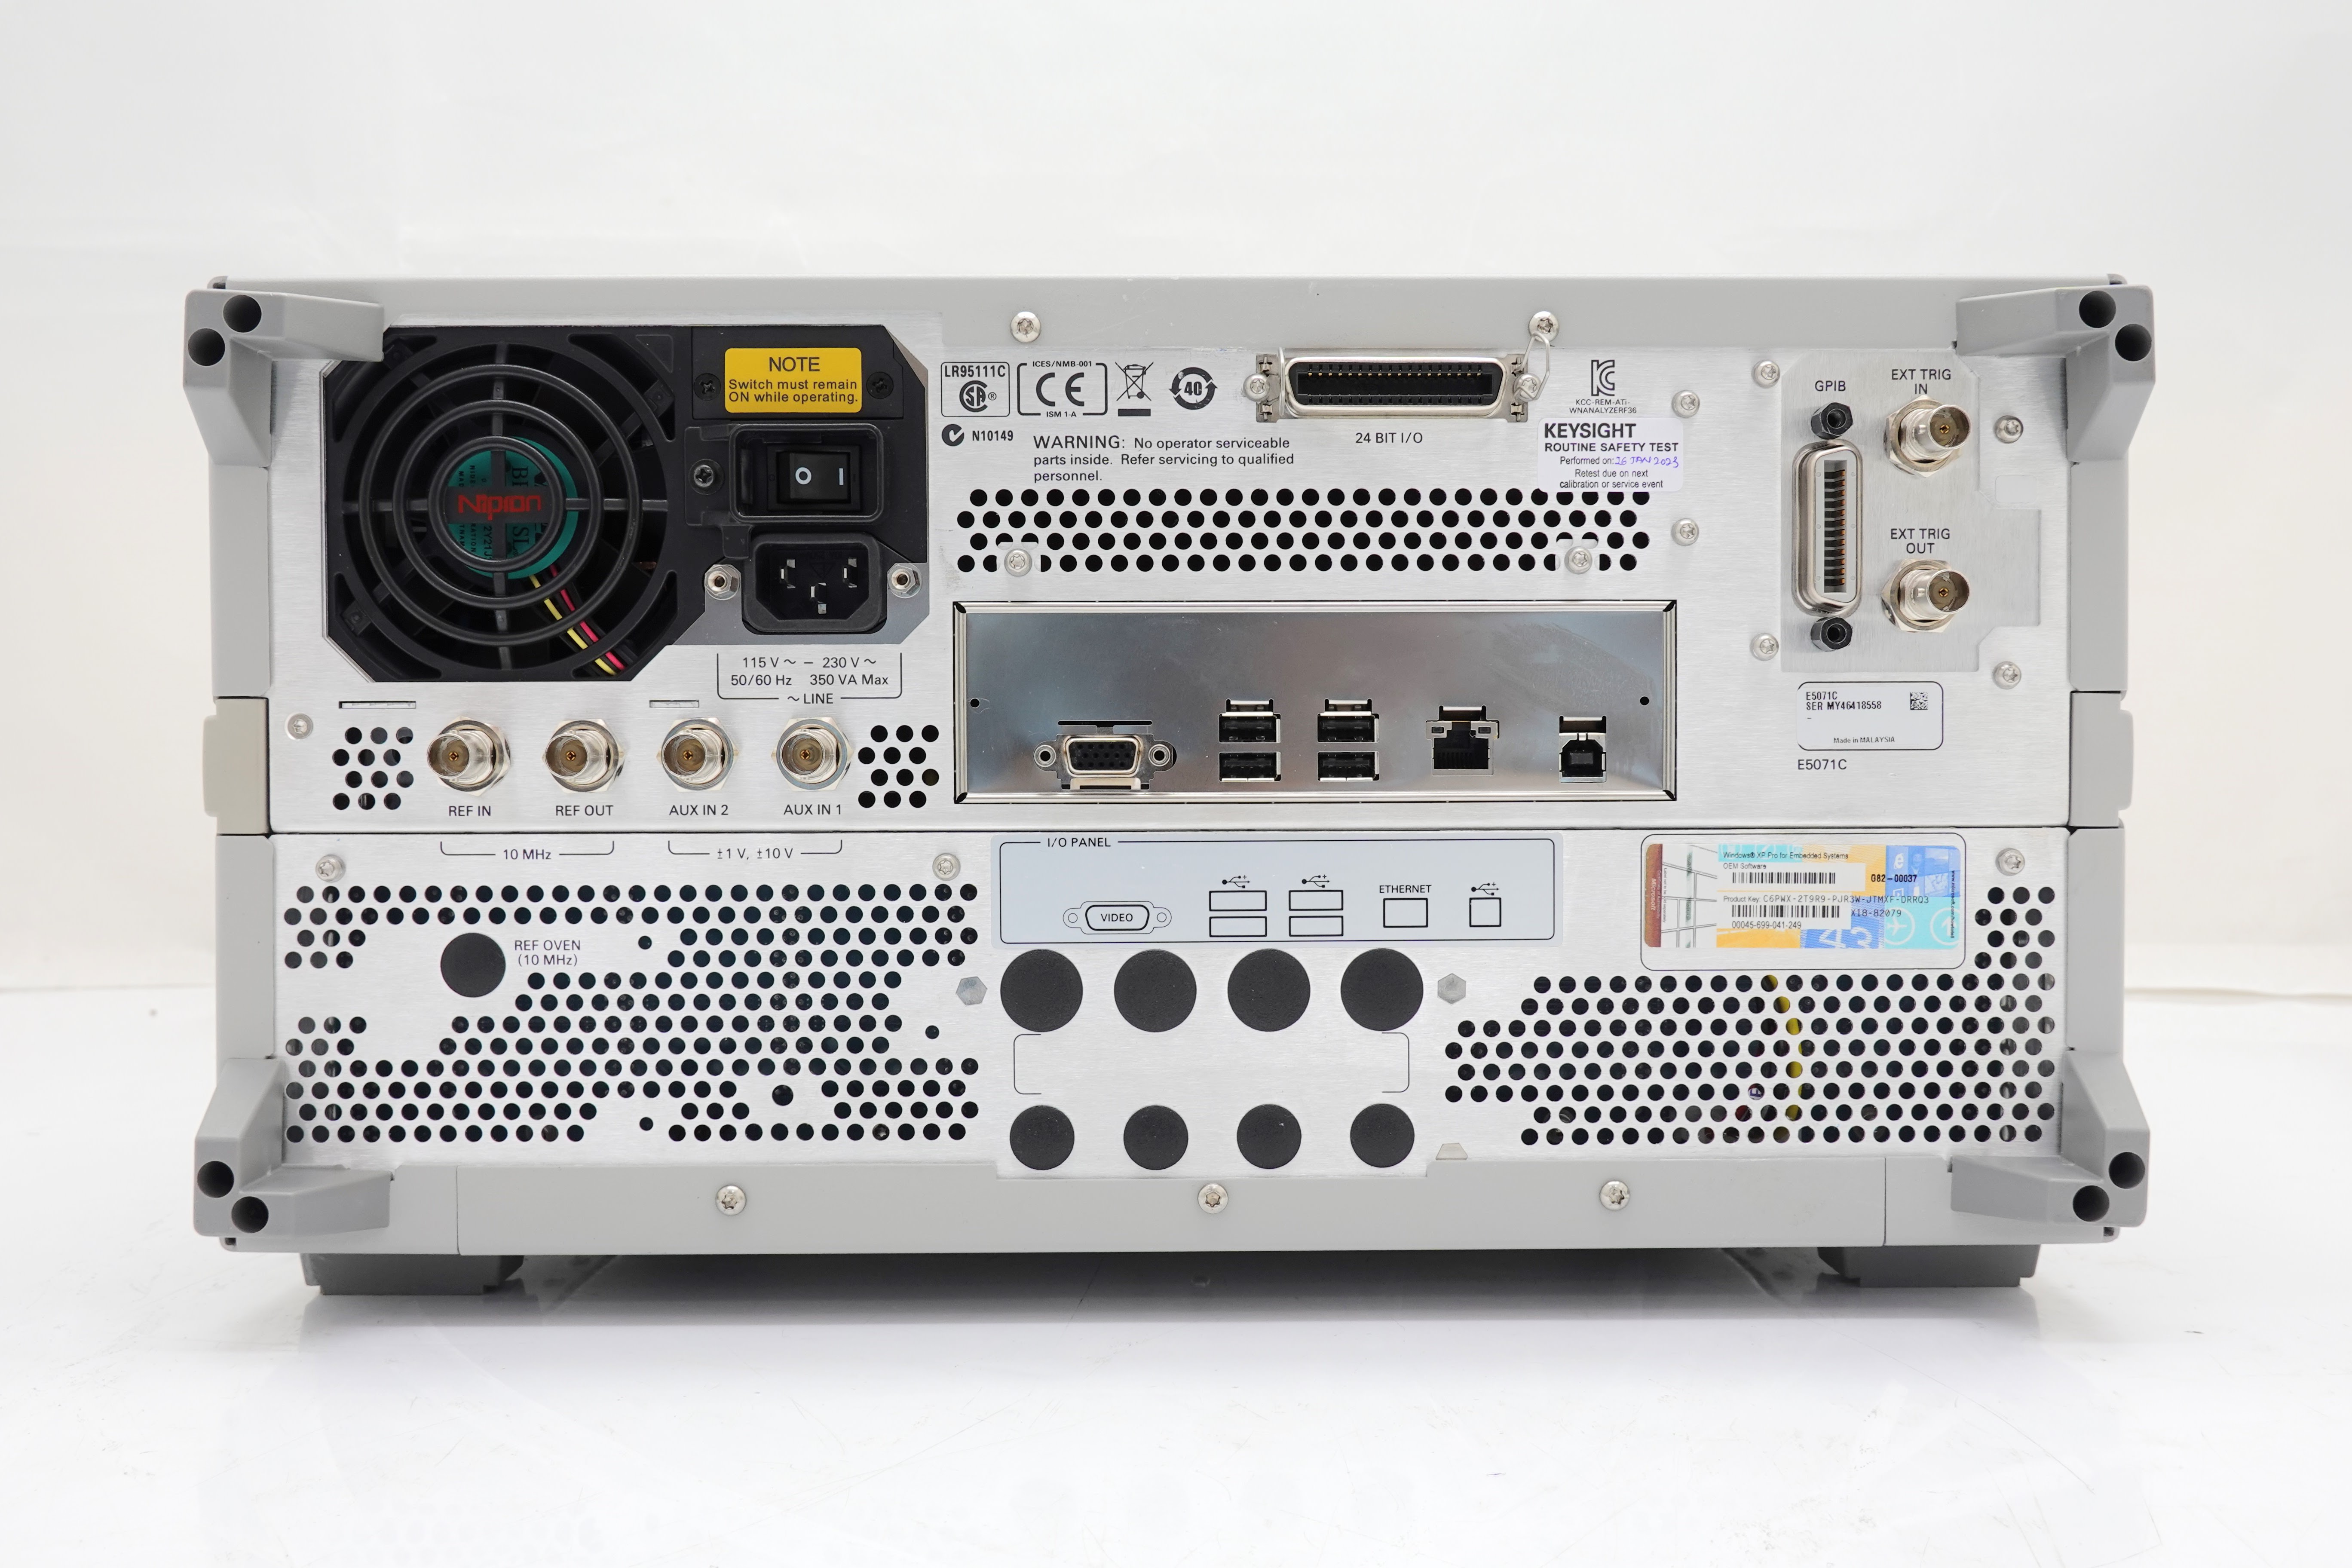 Keysight E5071C-440 4-port Test Set / 9 kHz to 4.5 GHz / Without Bias Tees